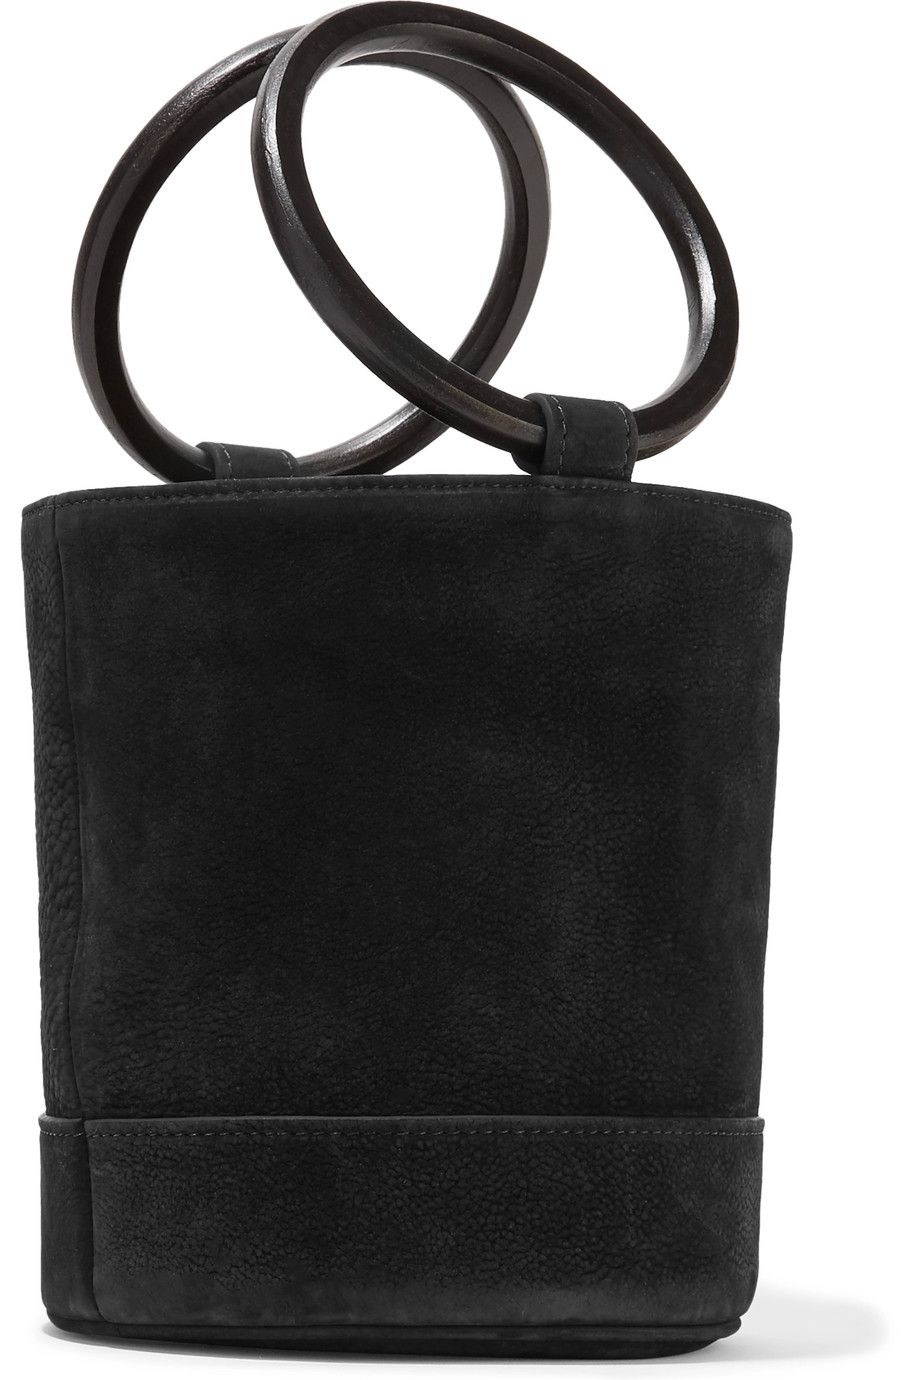 Bag, Handbag, Black, Leather, Fashion accessory, Shoulder bag, Luggage and bags, Tote bag, 